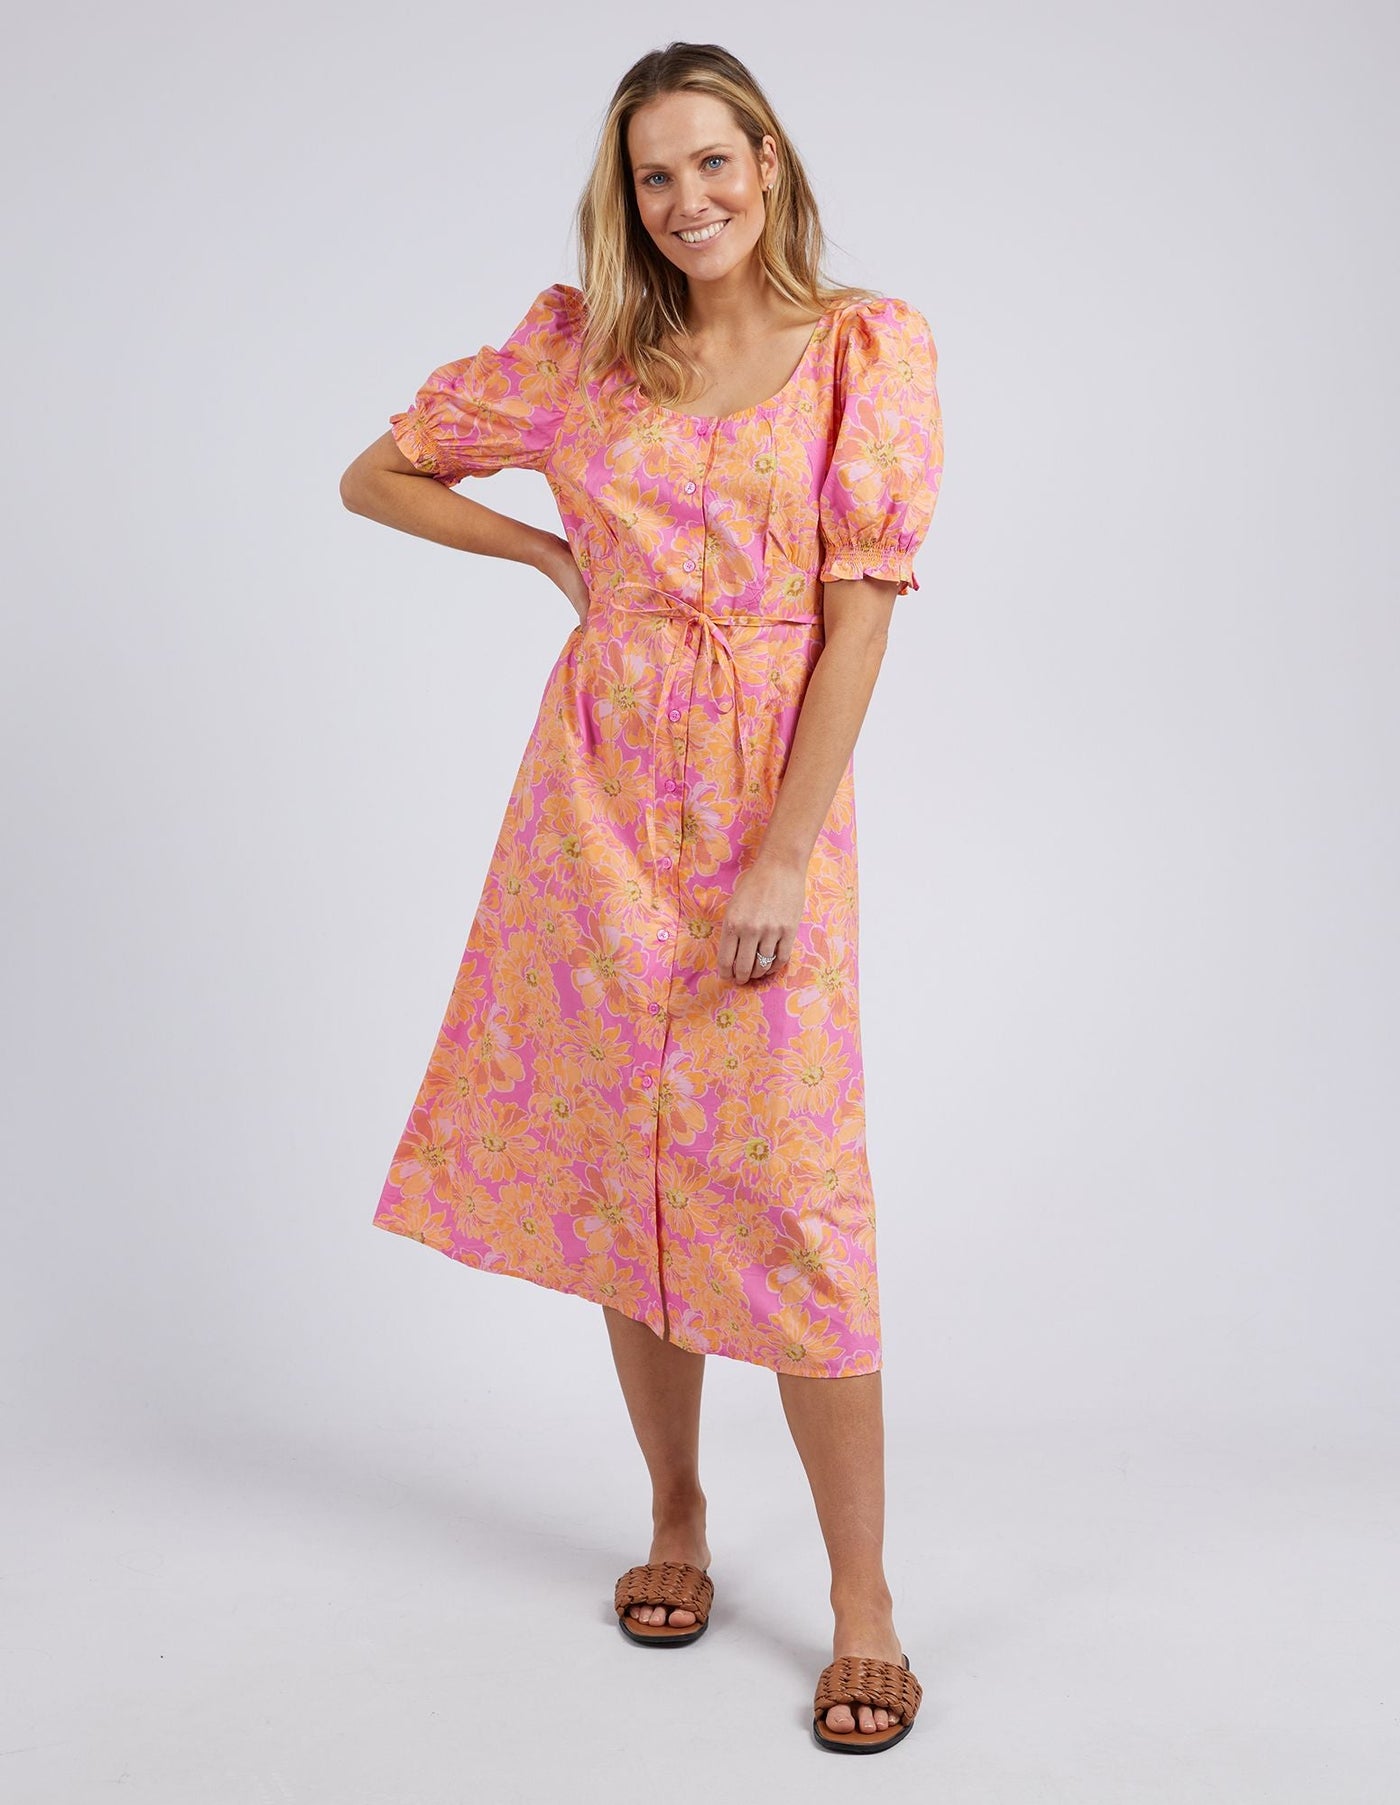 Fuchsia Floral Dress - Print-Elm Lifestyle-Lima & Co